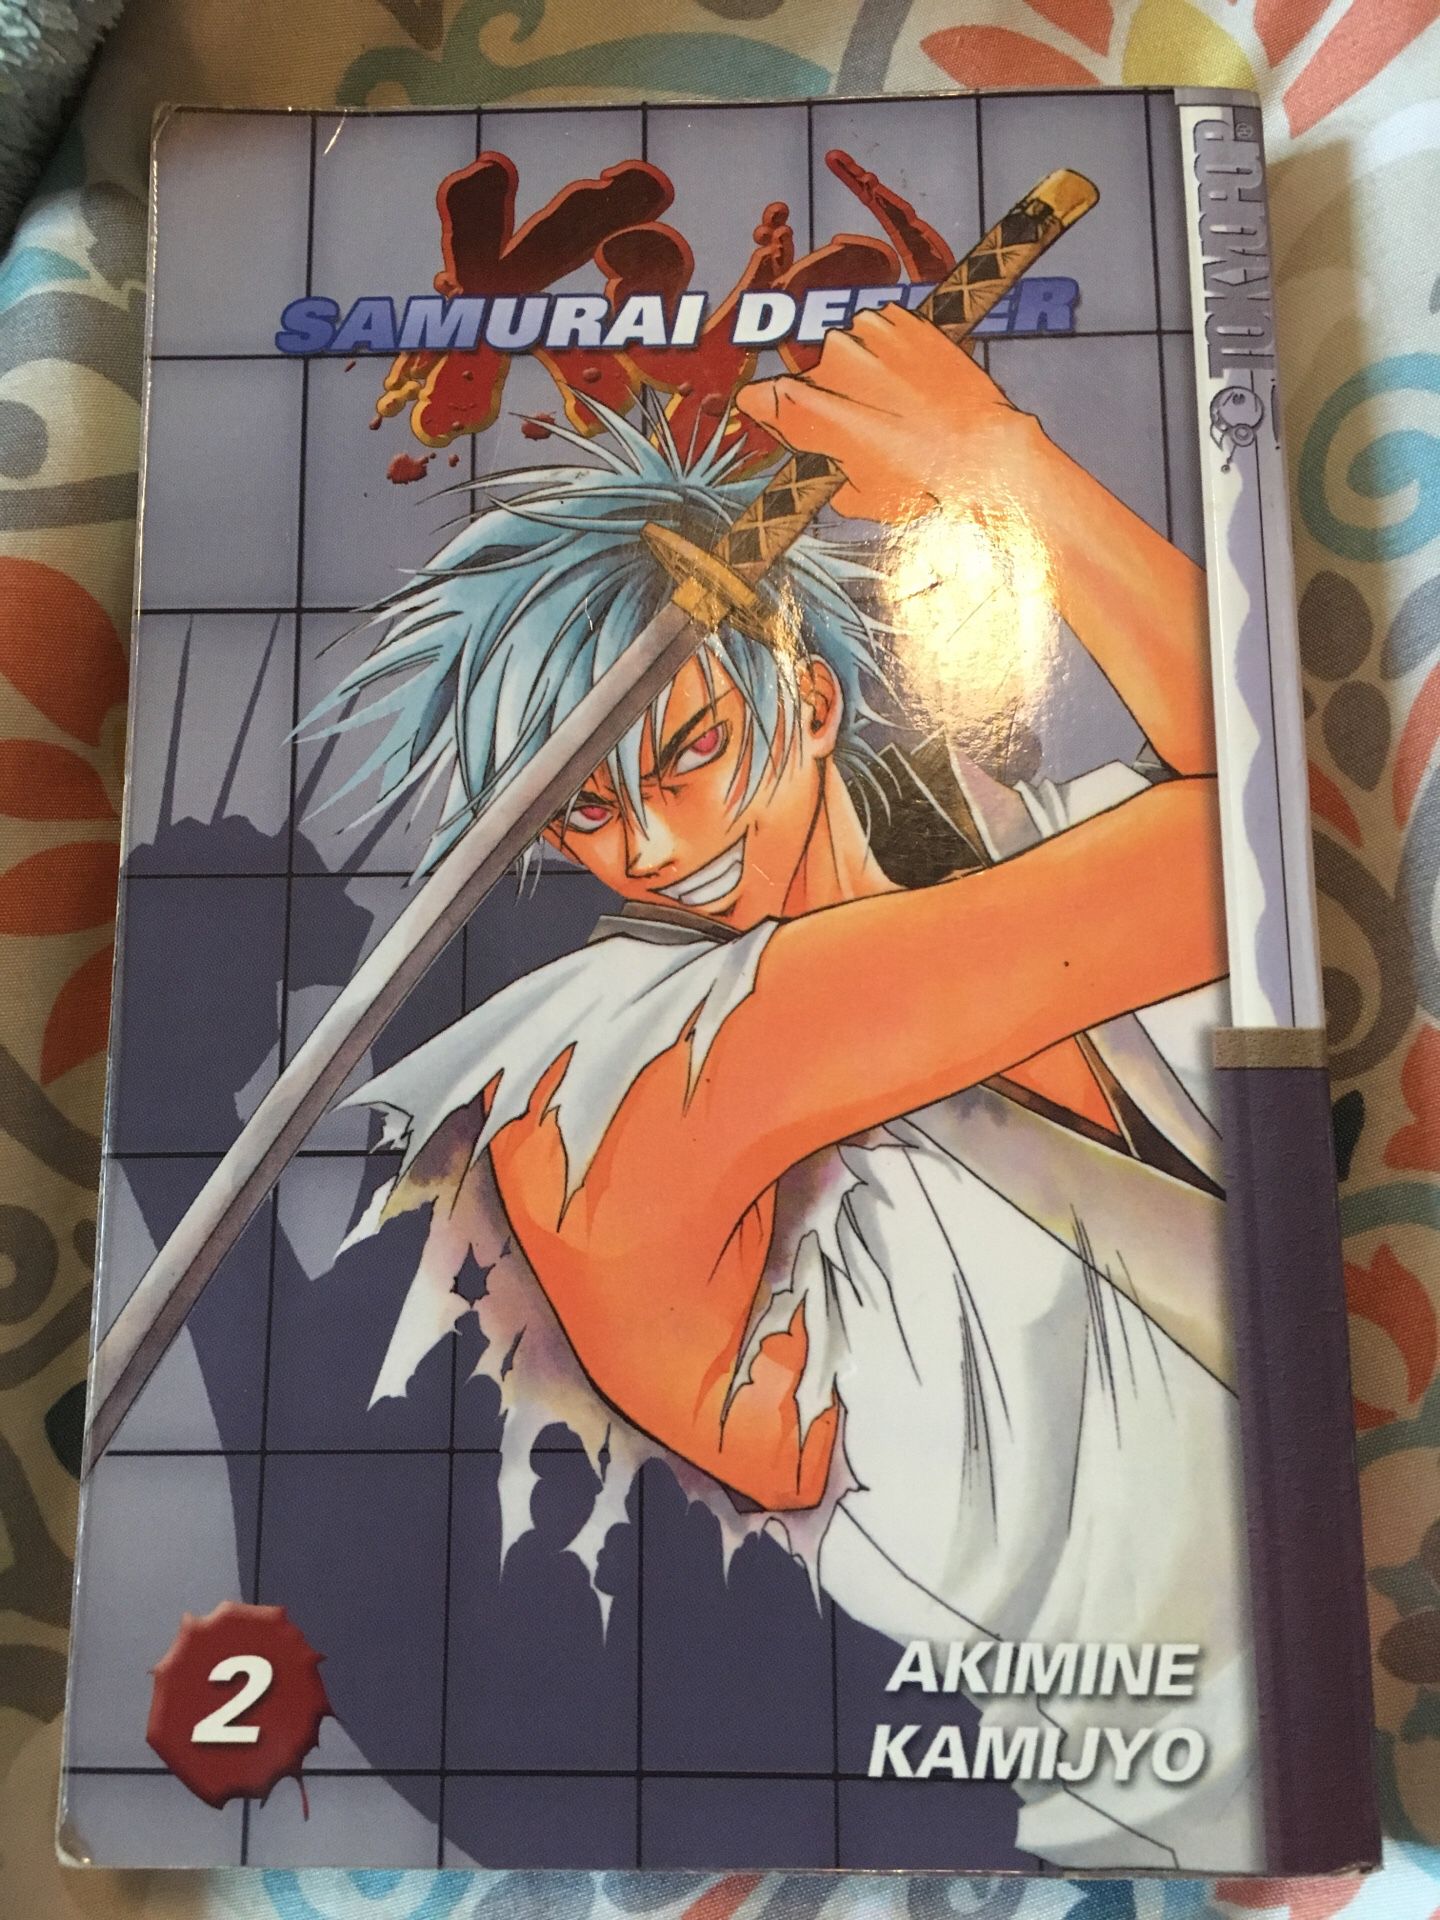 Kyo Samurai Deeper Volume 2 Manga